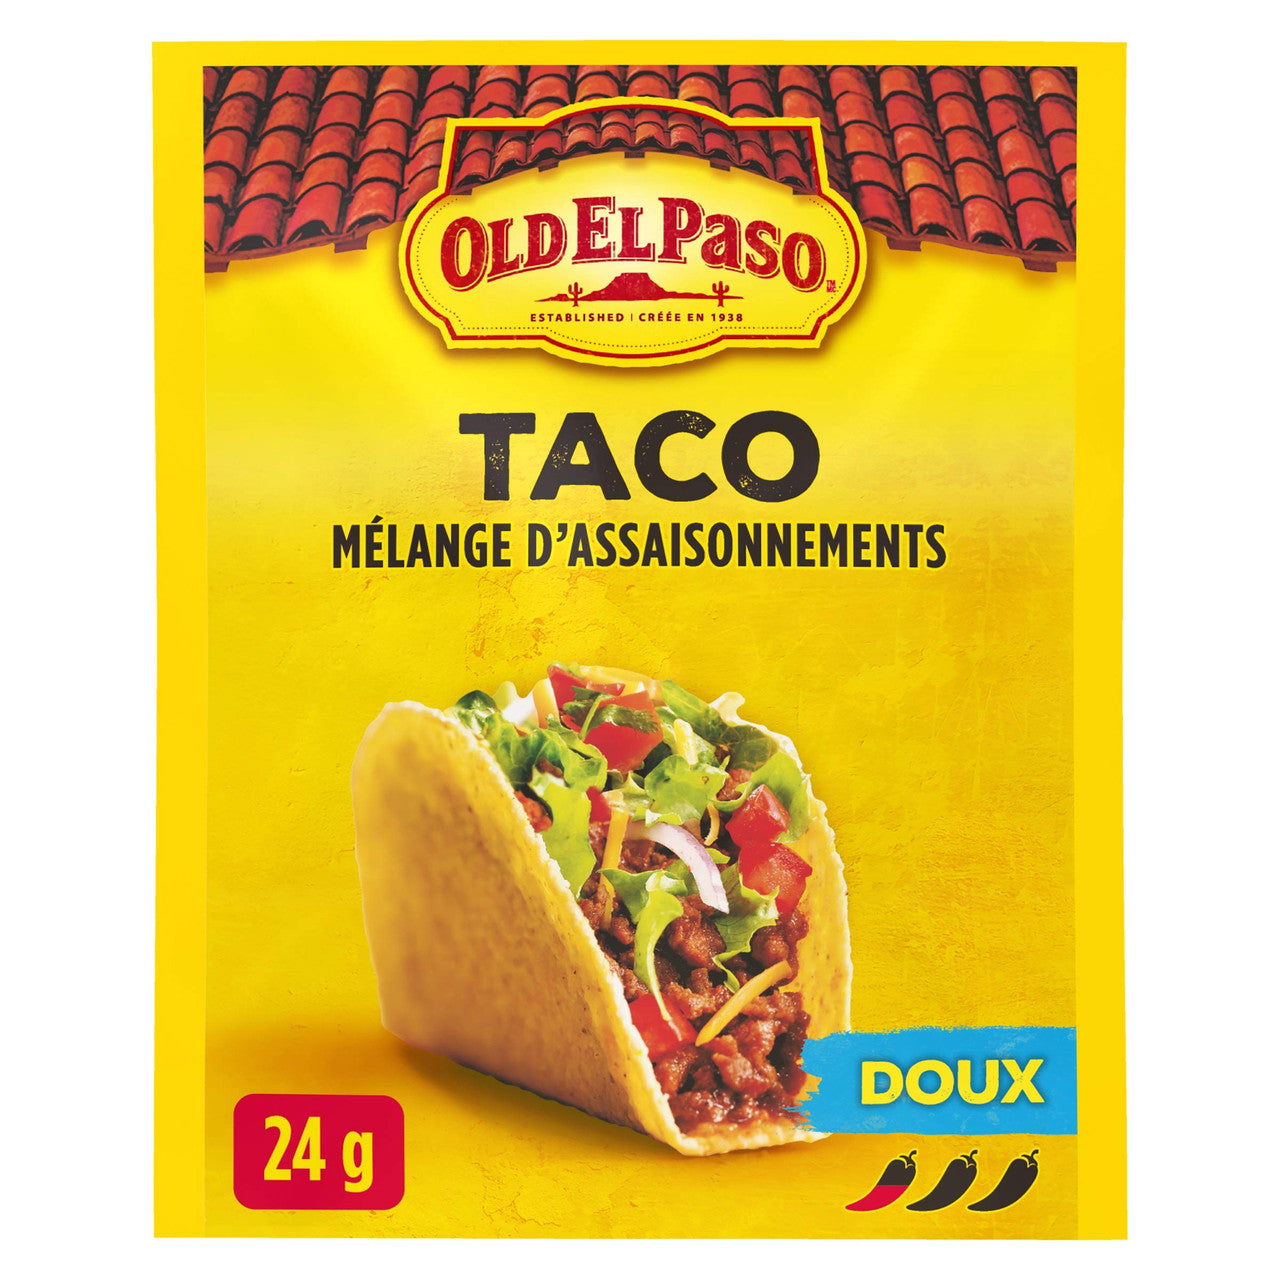 Old El Paso, Taco Seasoning Mix Mild , 24g/0.8oz., {Imported from Canada}